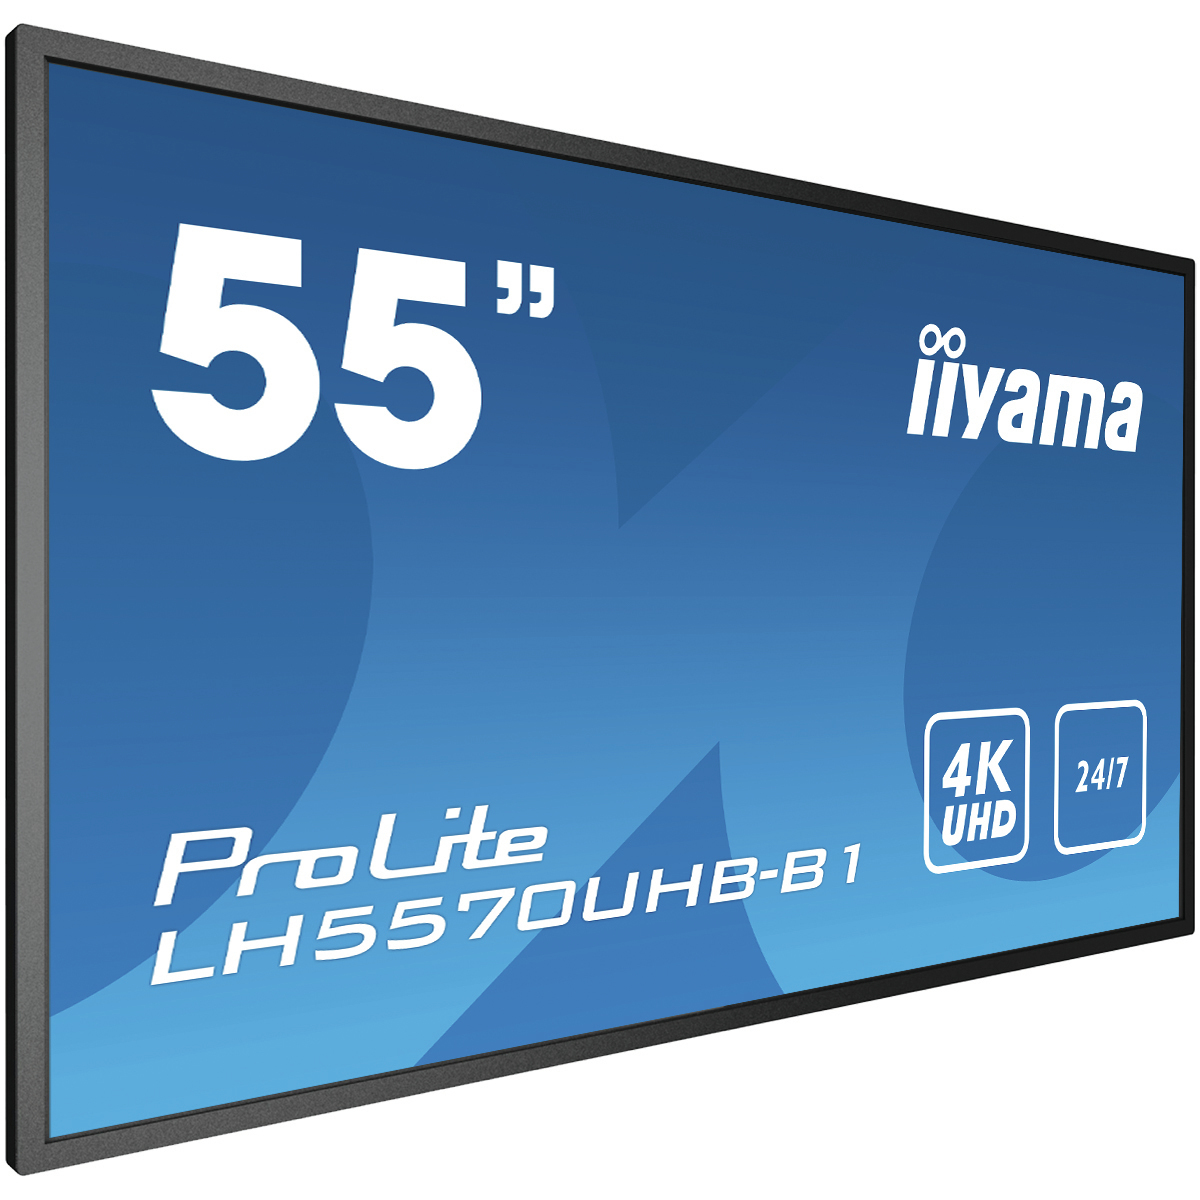 55iWIDE LCD 3840 x 2160 4K UHD VA panelLED Bl.